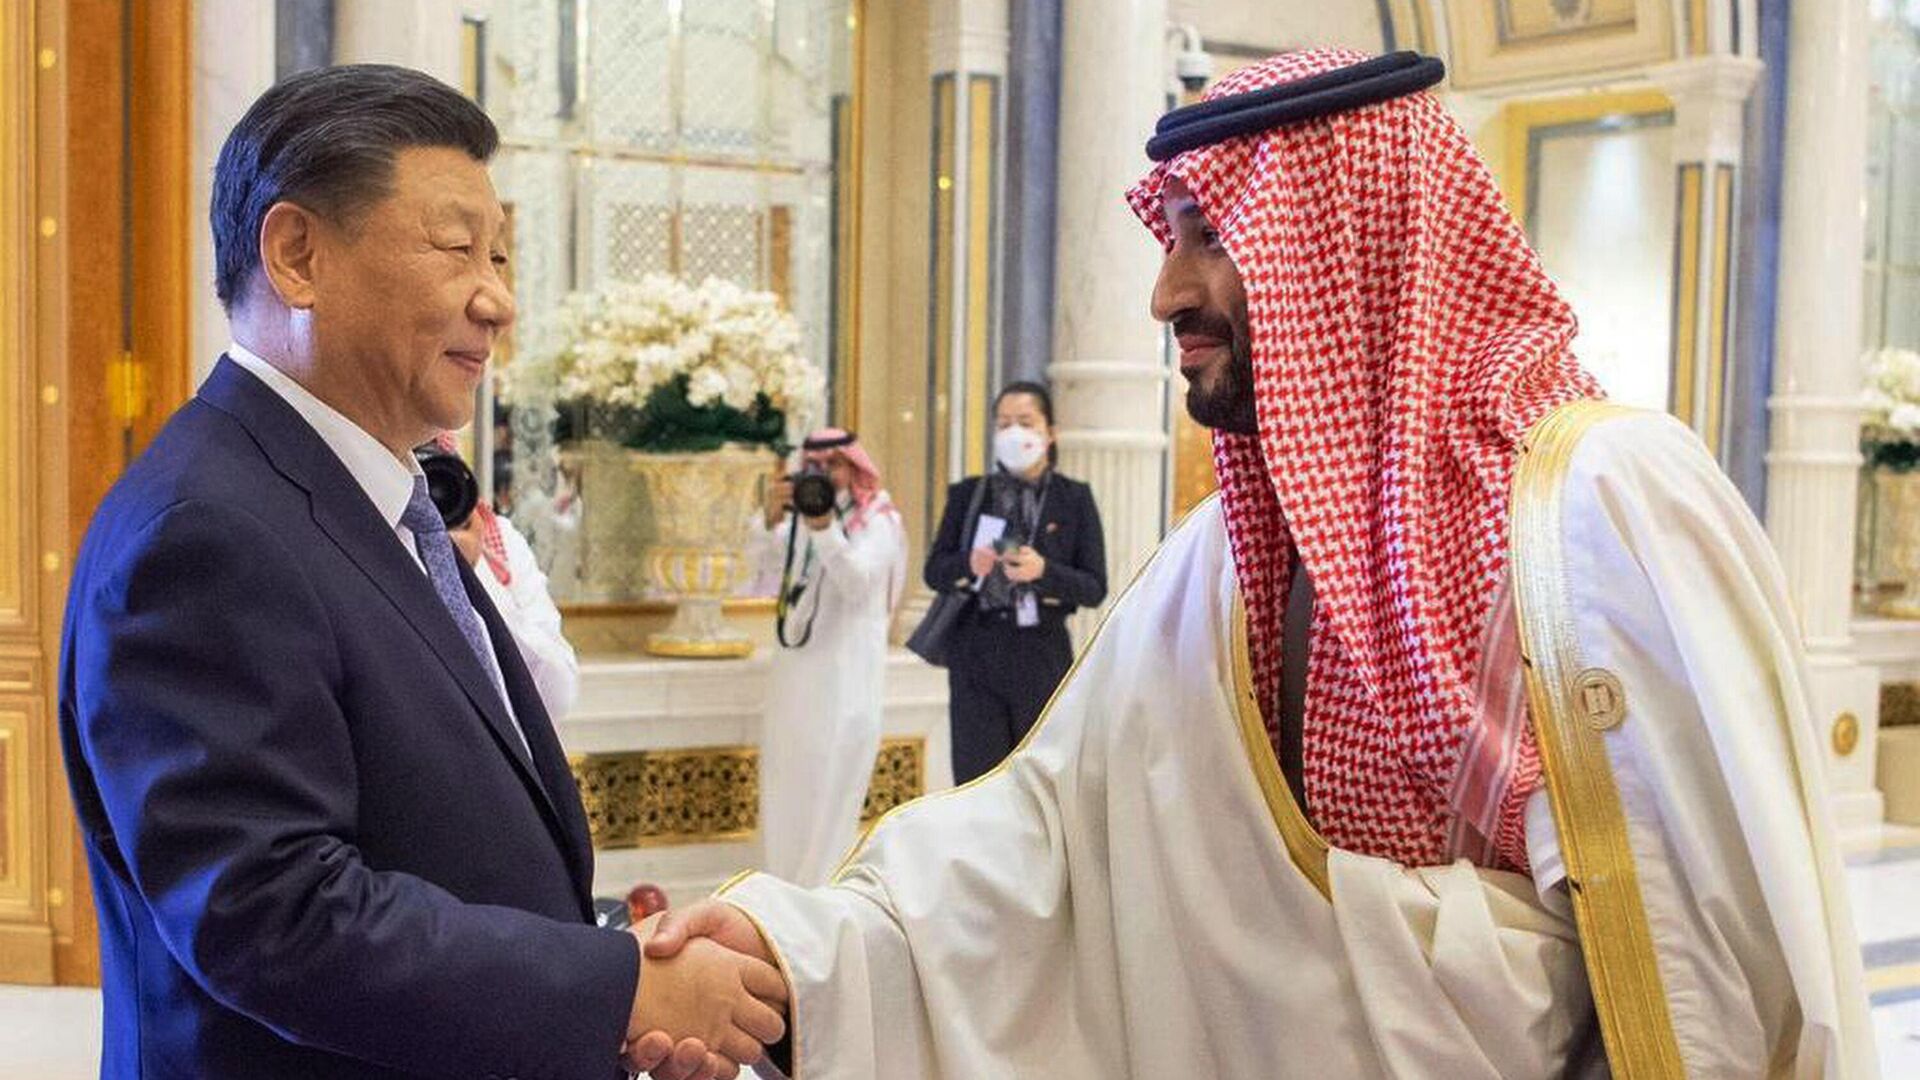 Ásia/Médio Oriente: A visita de Xi Jinping à Arábia Saudita